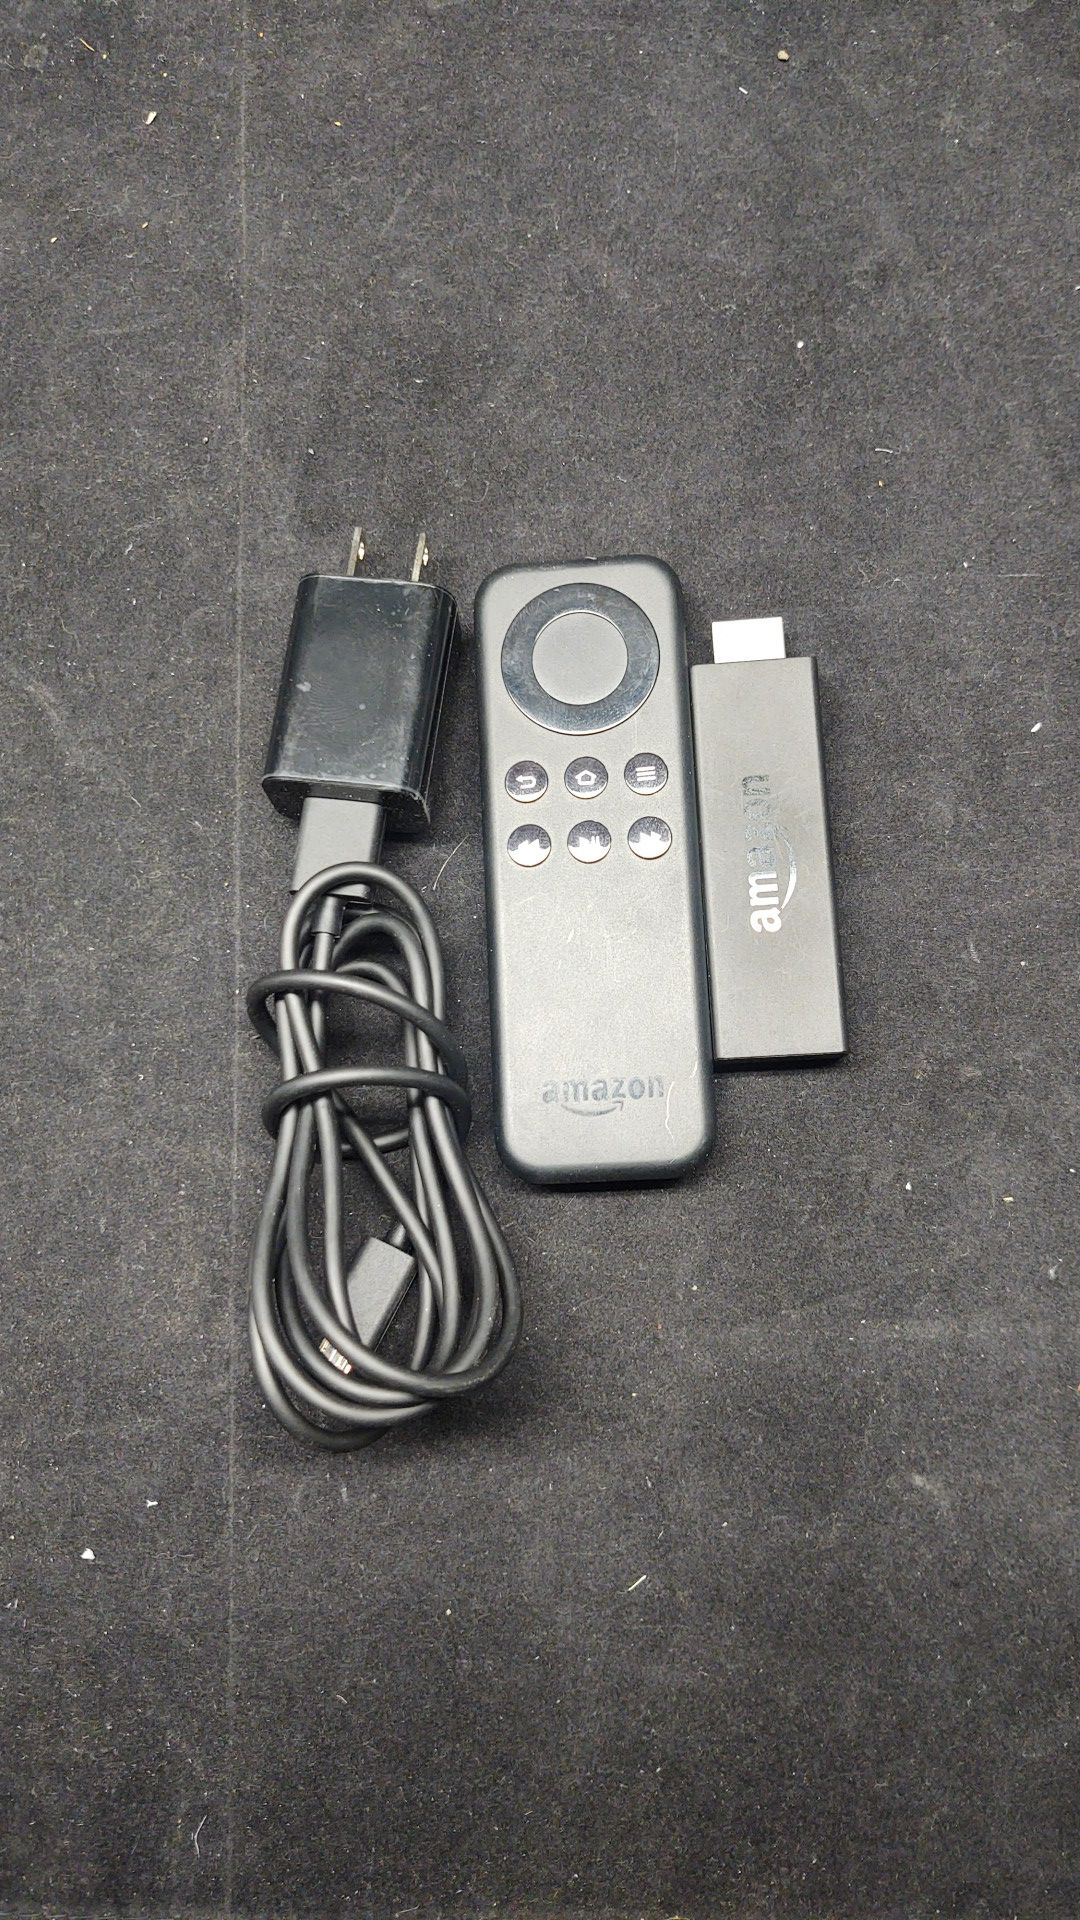 Amazon Fire TV Stick Model No. W87CUN 1st Generation Smart Media Hub